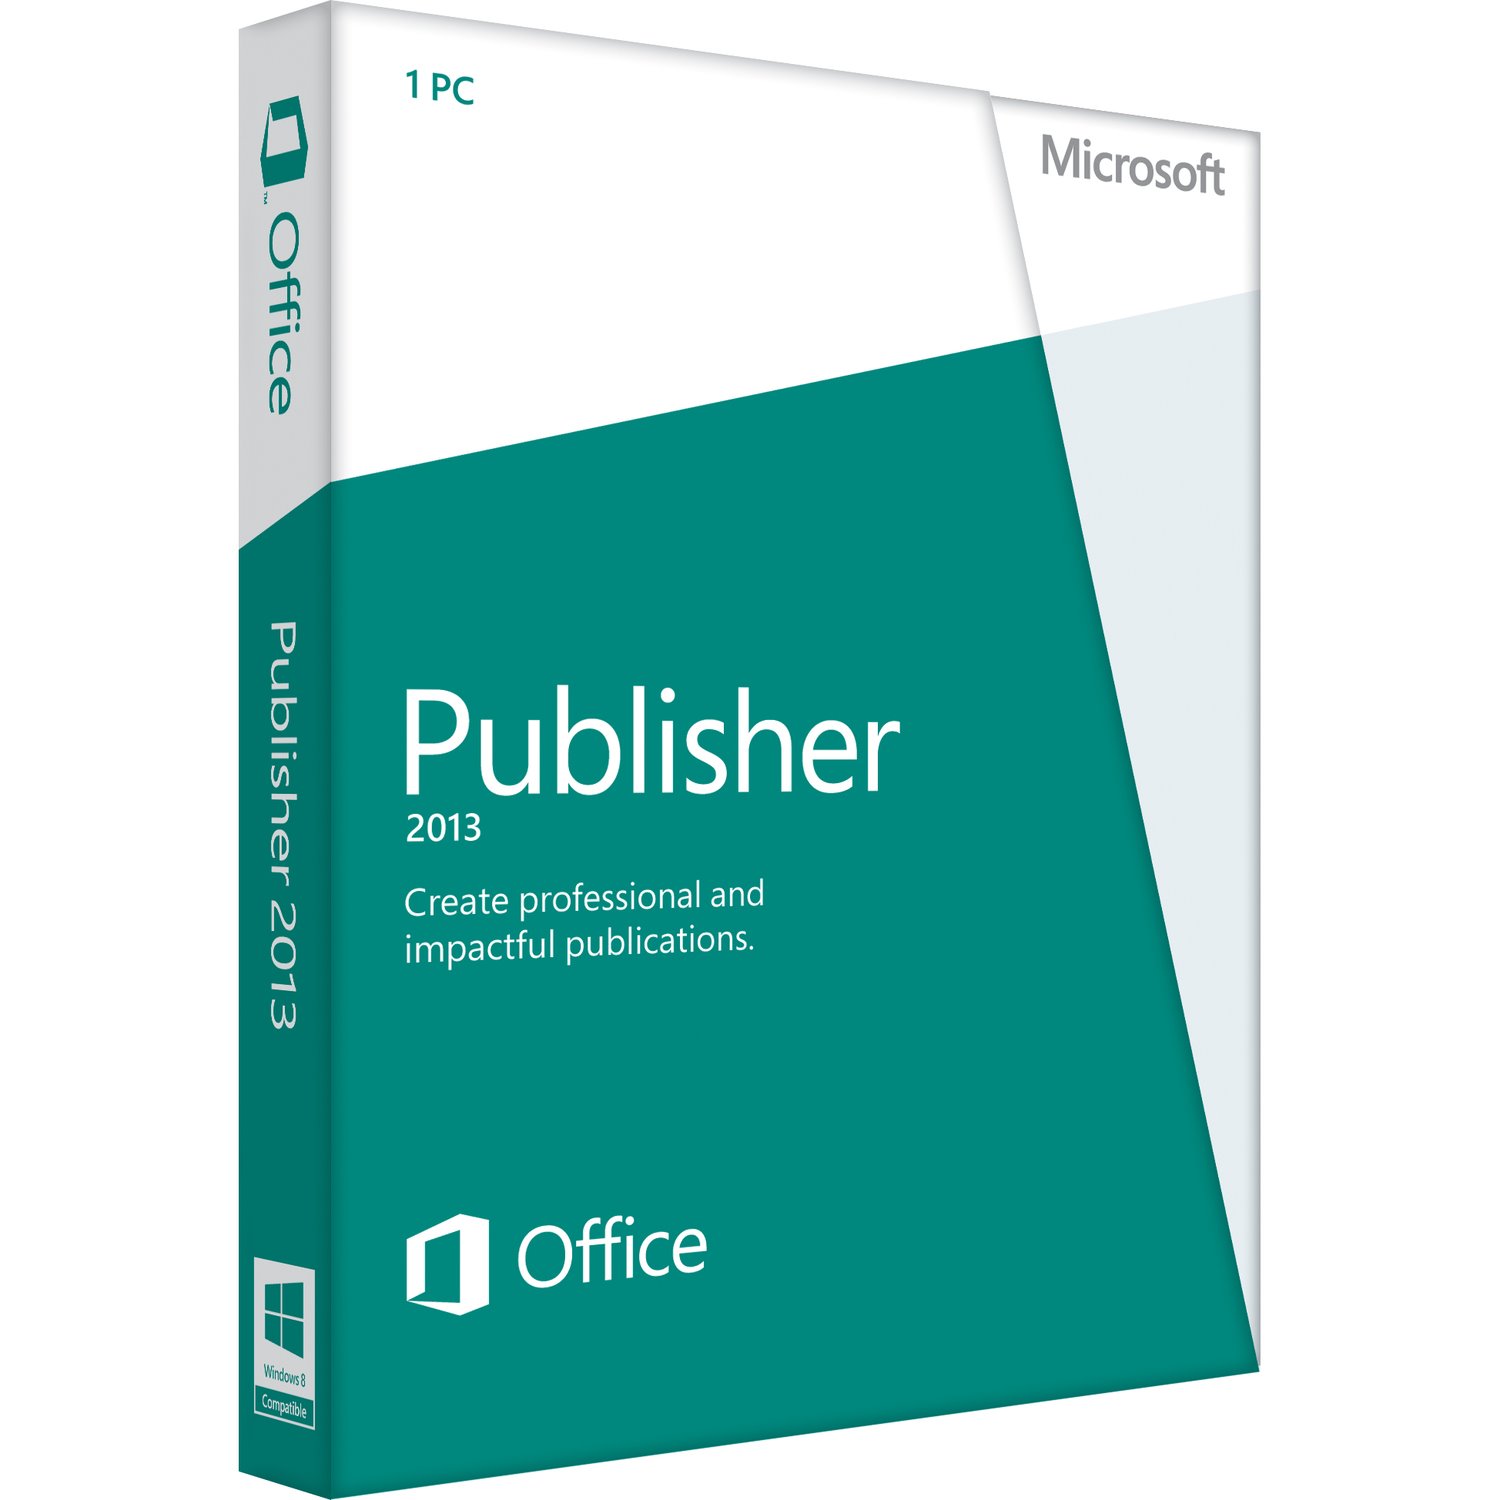 Microsoft Publisher 2013 32/64-bit - Complete Product - 1 PC - Standard